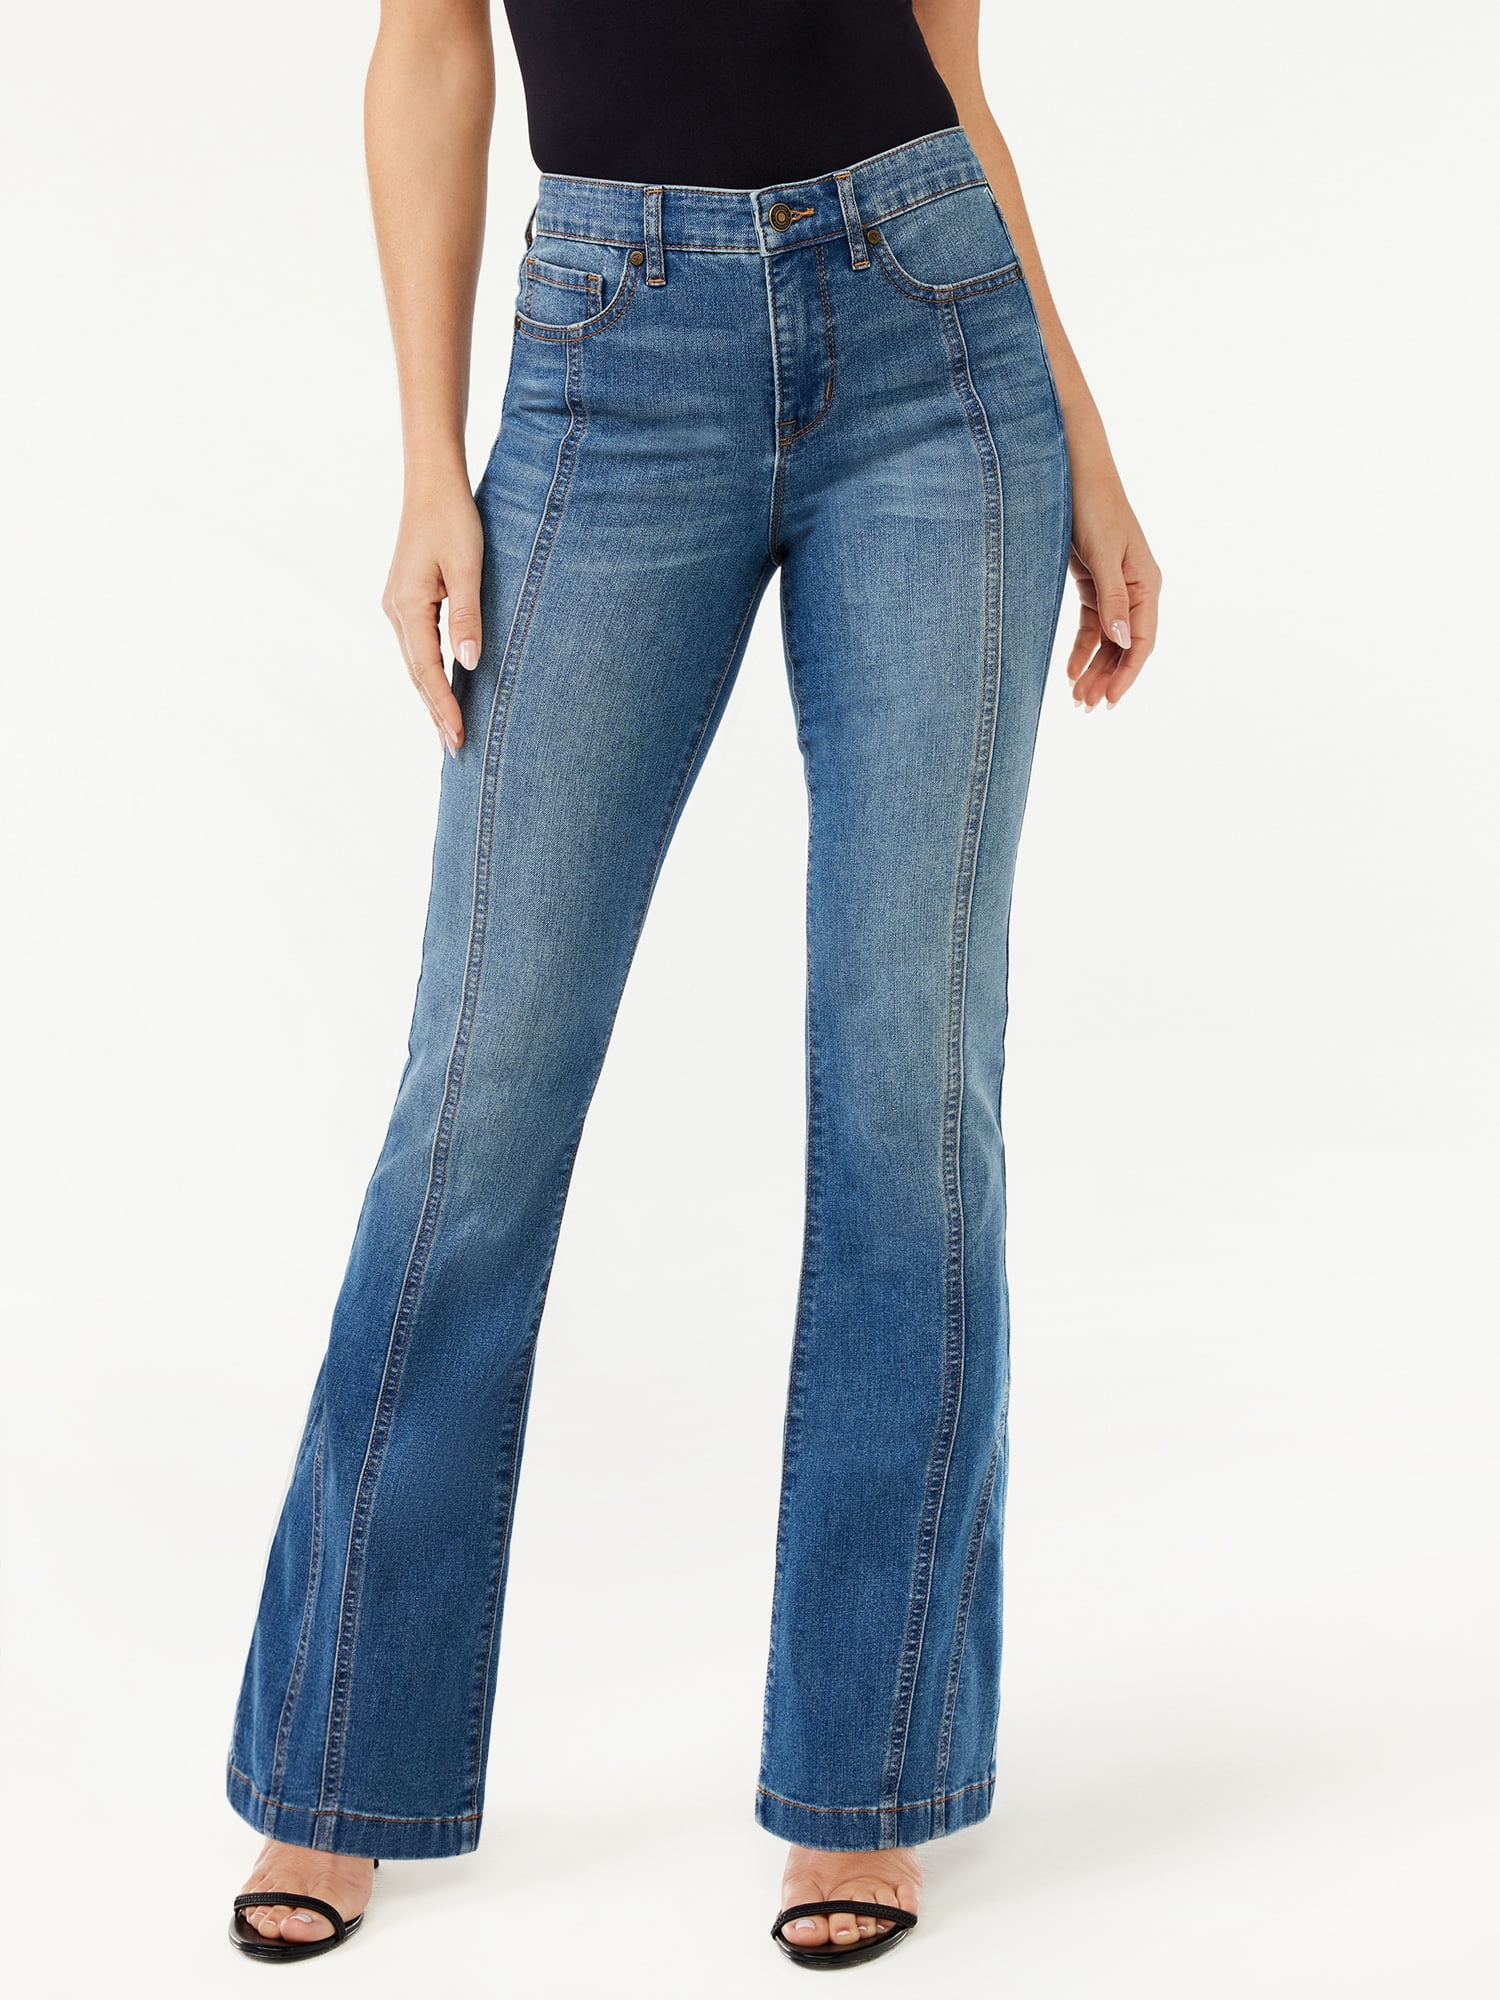 Sofia Jeans Women's Melisa High Rise Seamed Flare Jeans 